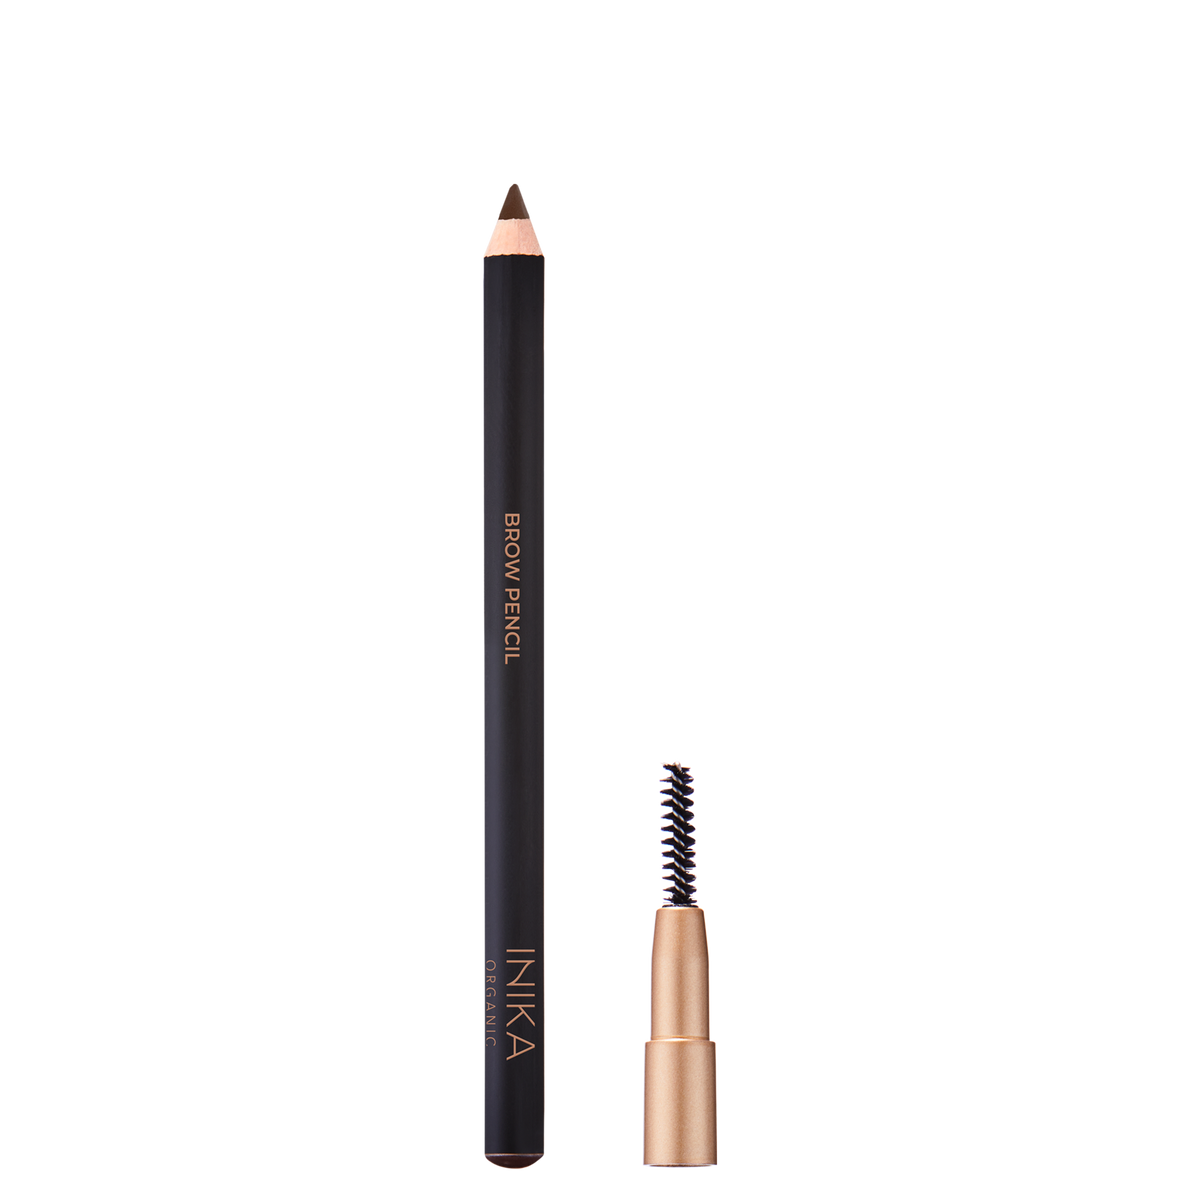 Inika Make up - Certified Organic Brow Pencil